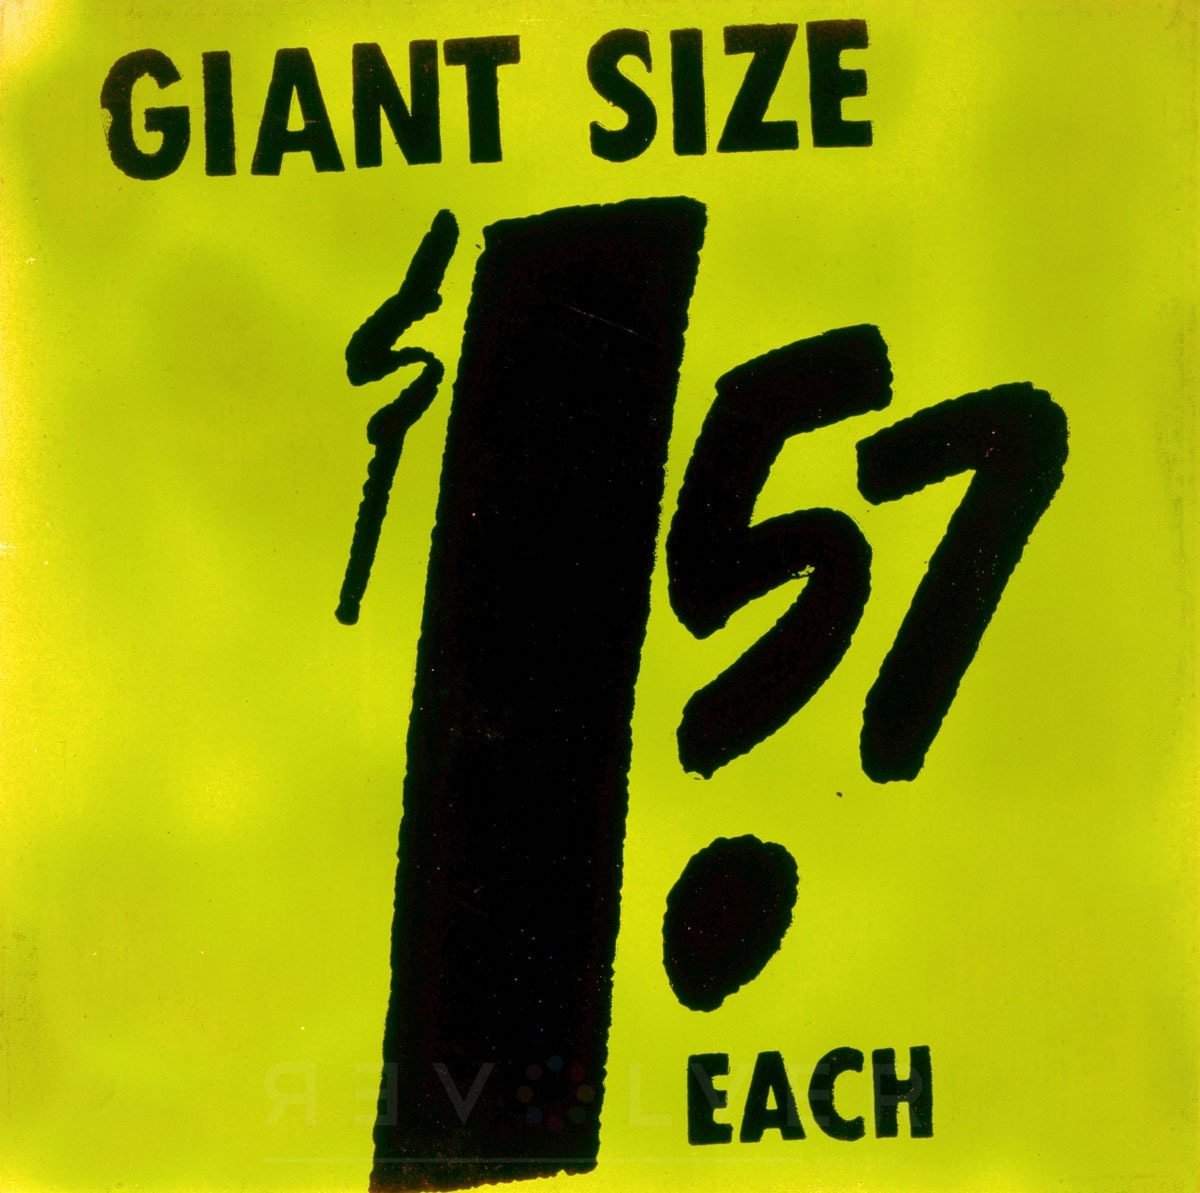 giant size 2